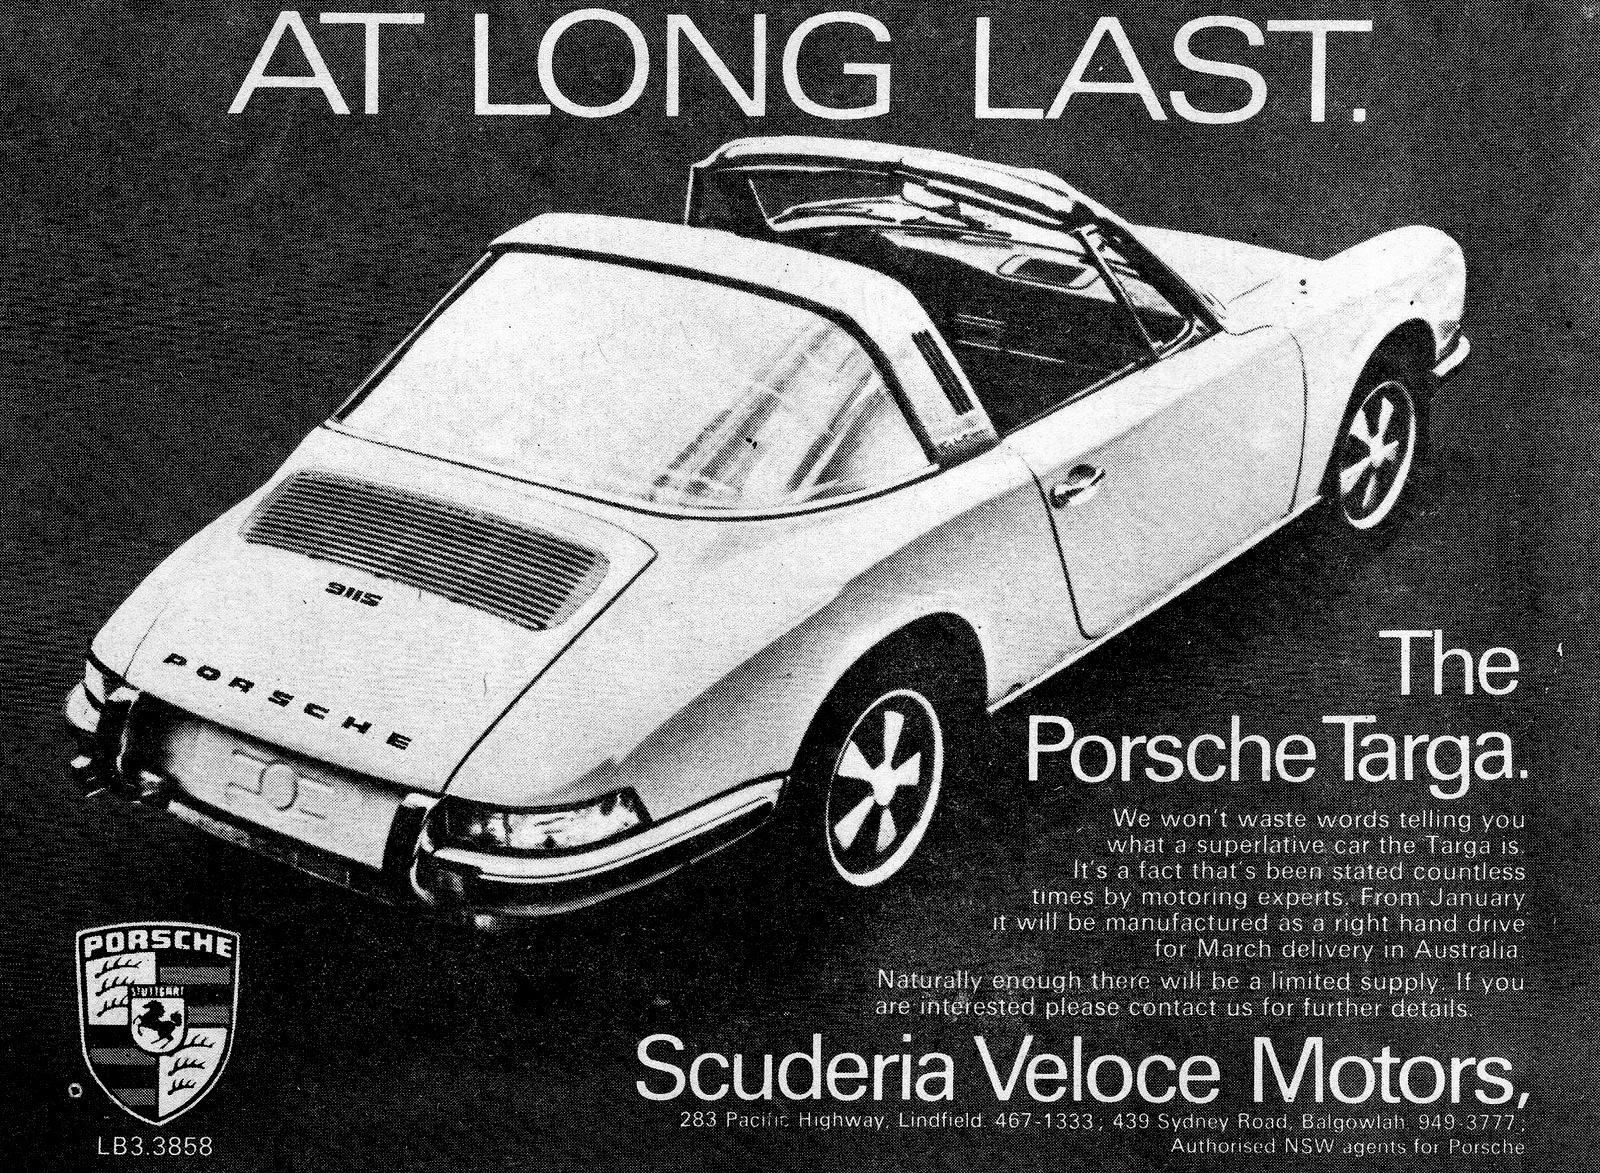 1973 Porsche Targa Scuderia Veloce Motors 